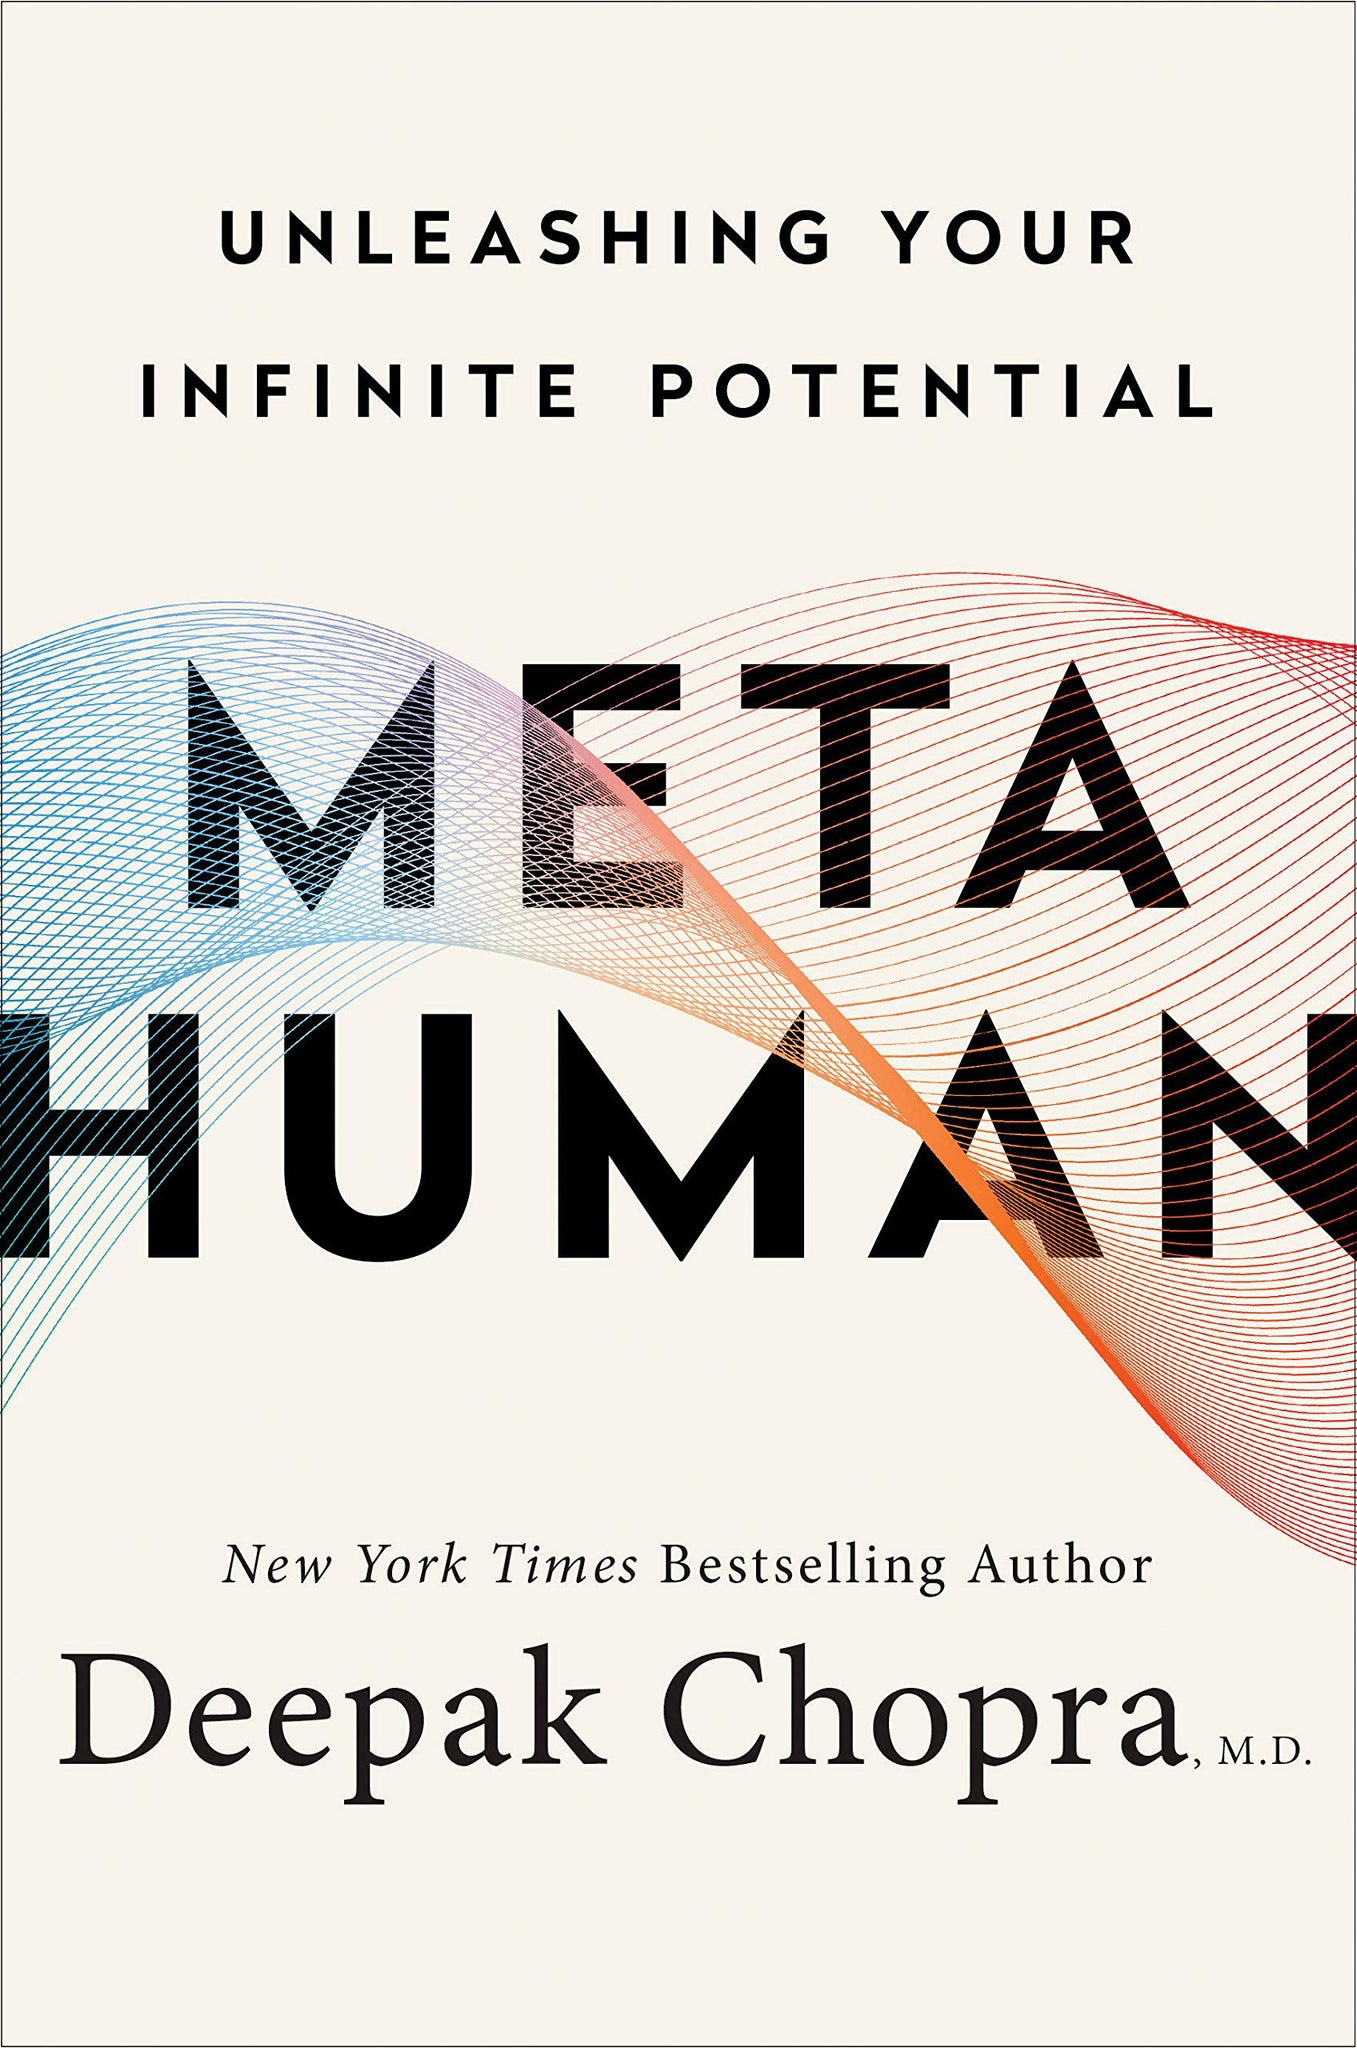 Metahuman: Unleashing Your Infinite Potential by Deepak Chopra